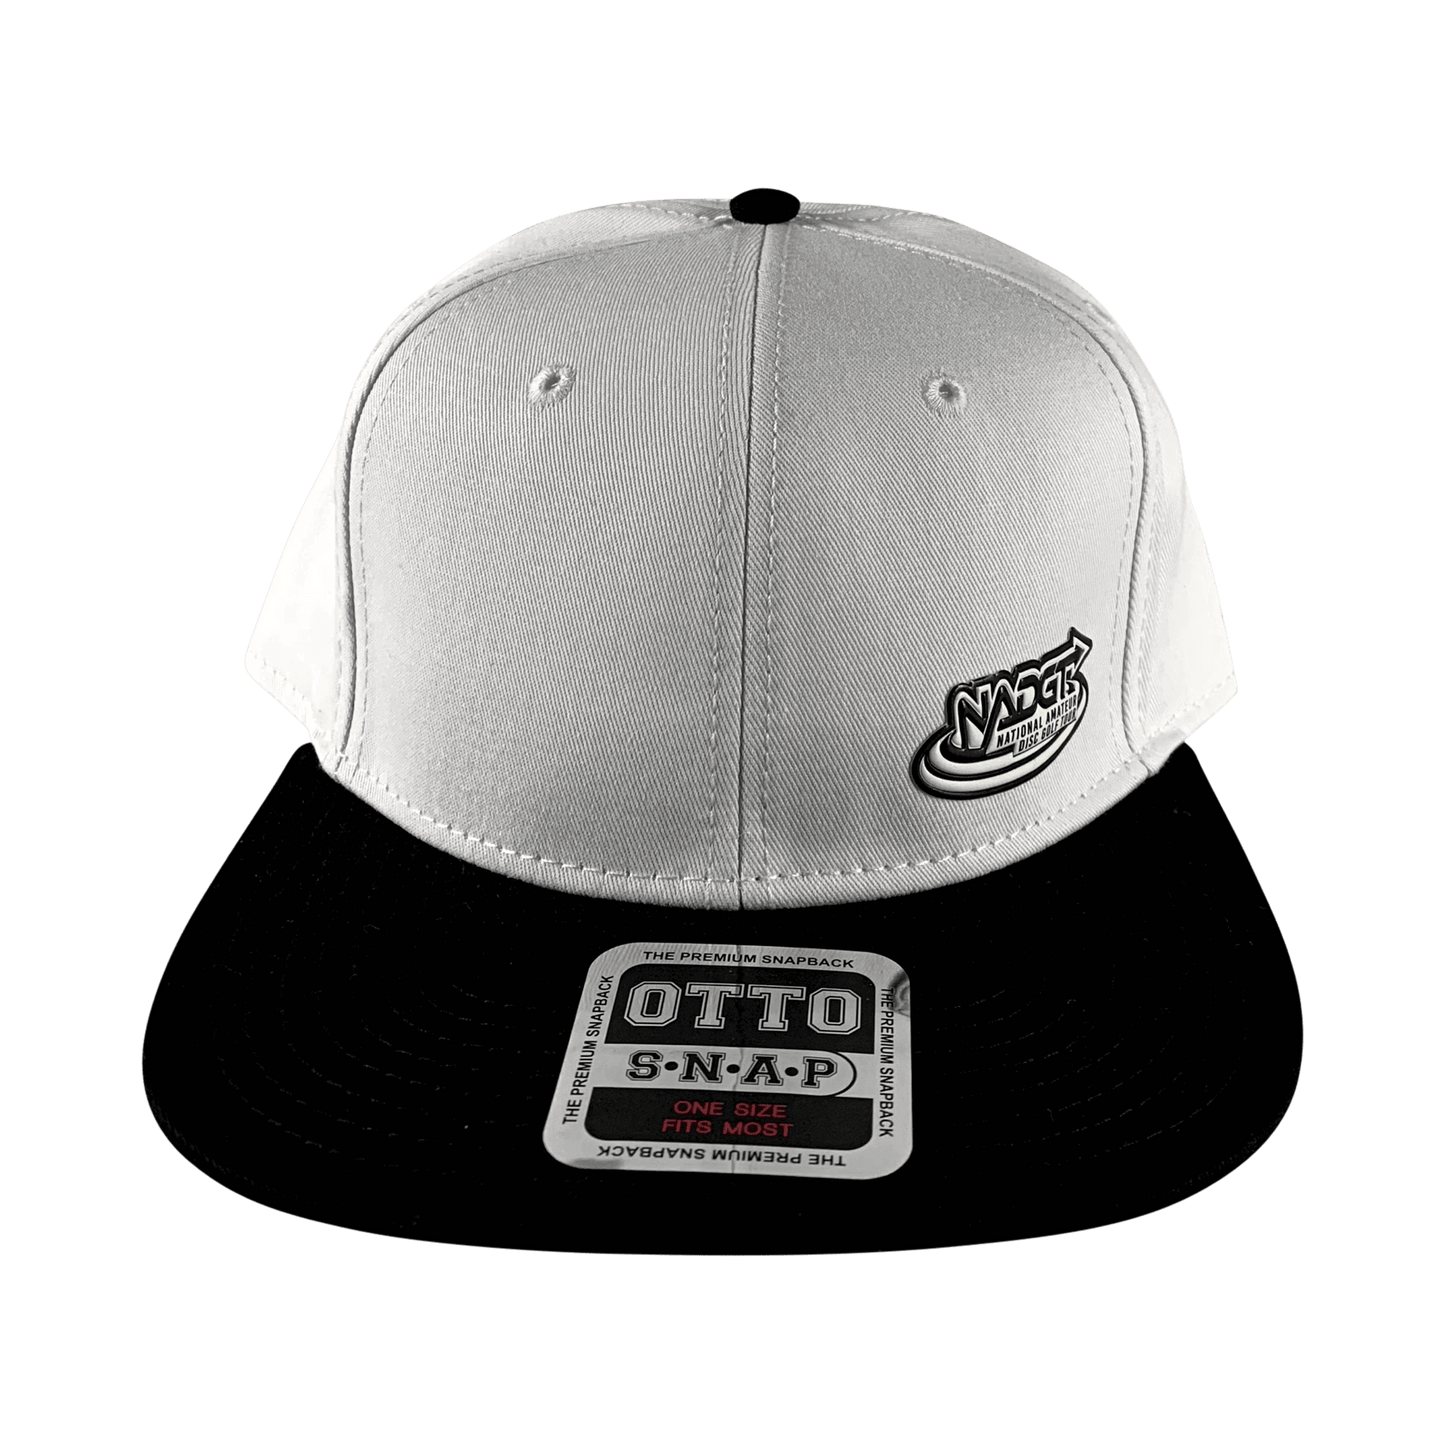 Flatbill Hat - NADGT Accessory Otto white 